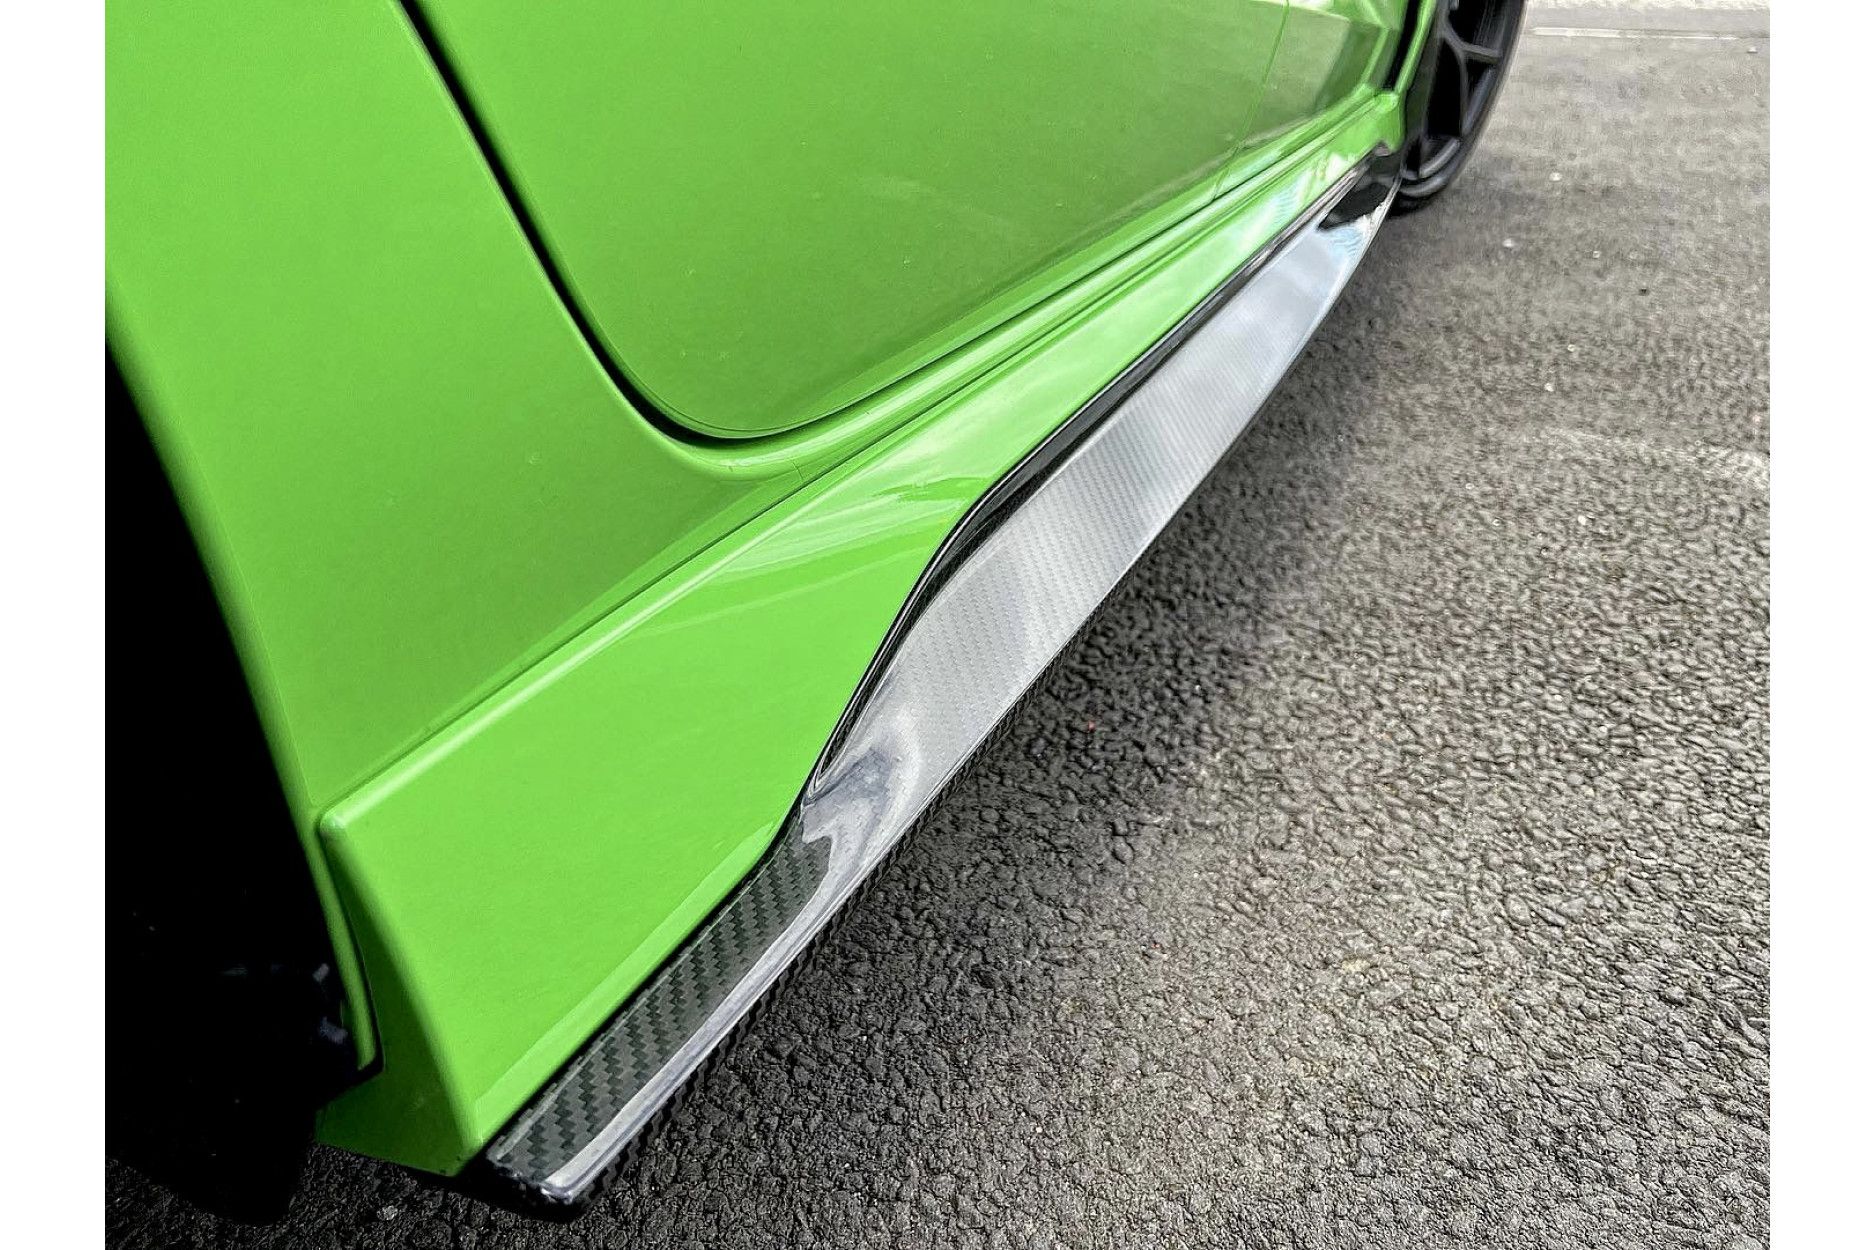 Automotive Passion Trockencarbon Seitenschweller für Audi RS3 8Y